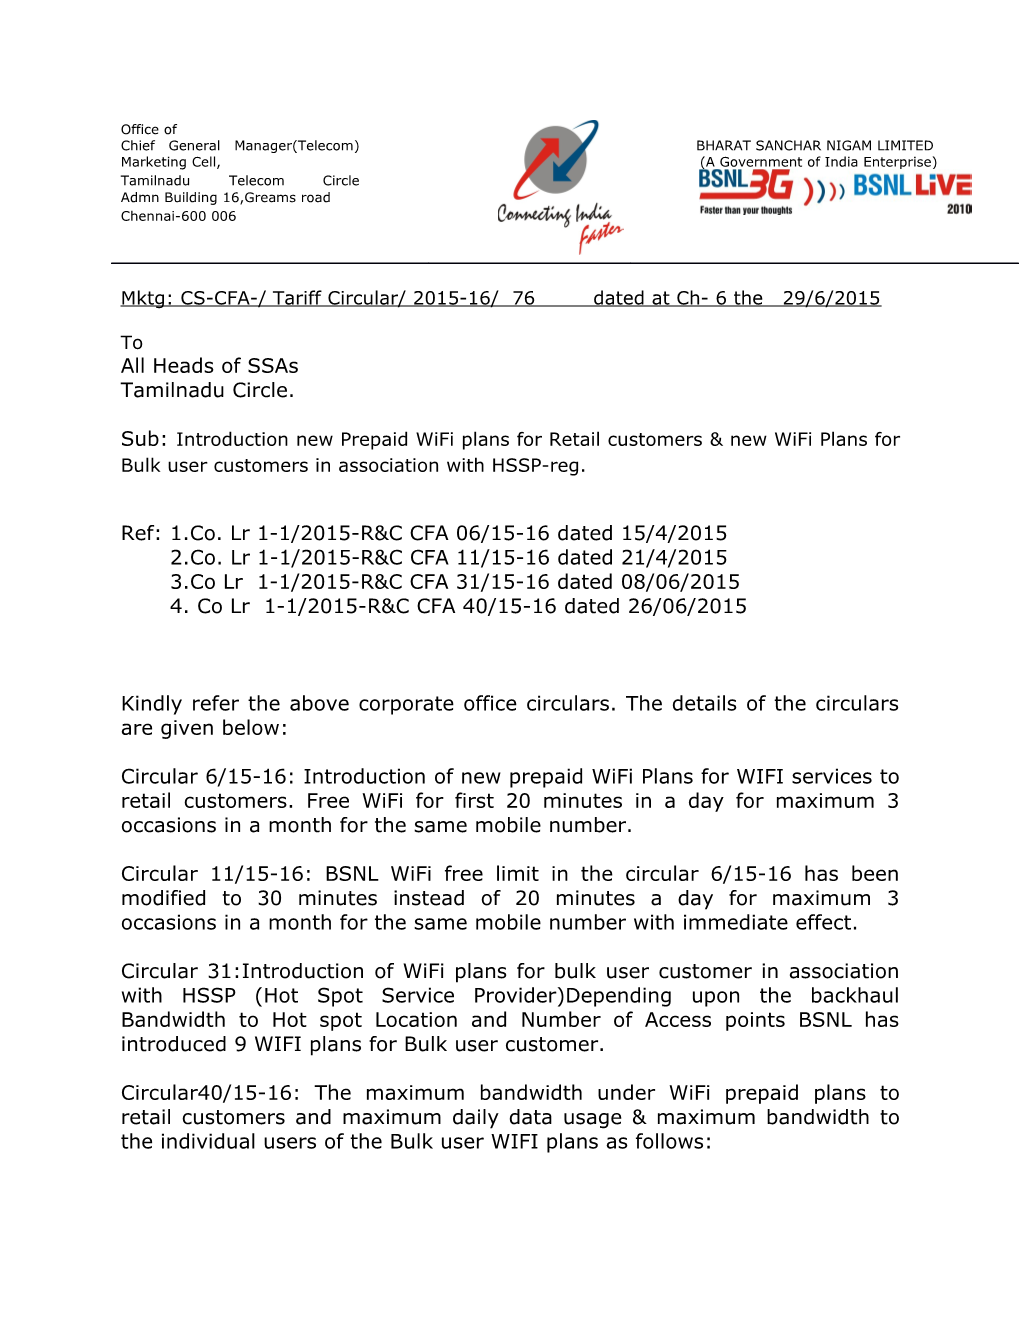 Mktg: CS-CFA-/ Tariff Circular/ 2015-16/ 76 Dated at Ch- 6 the 29/6/2015